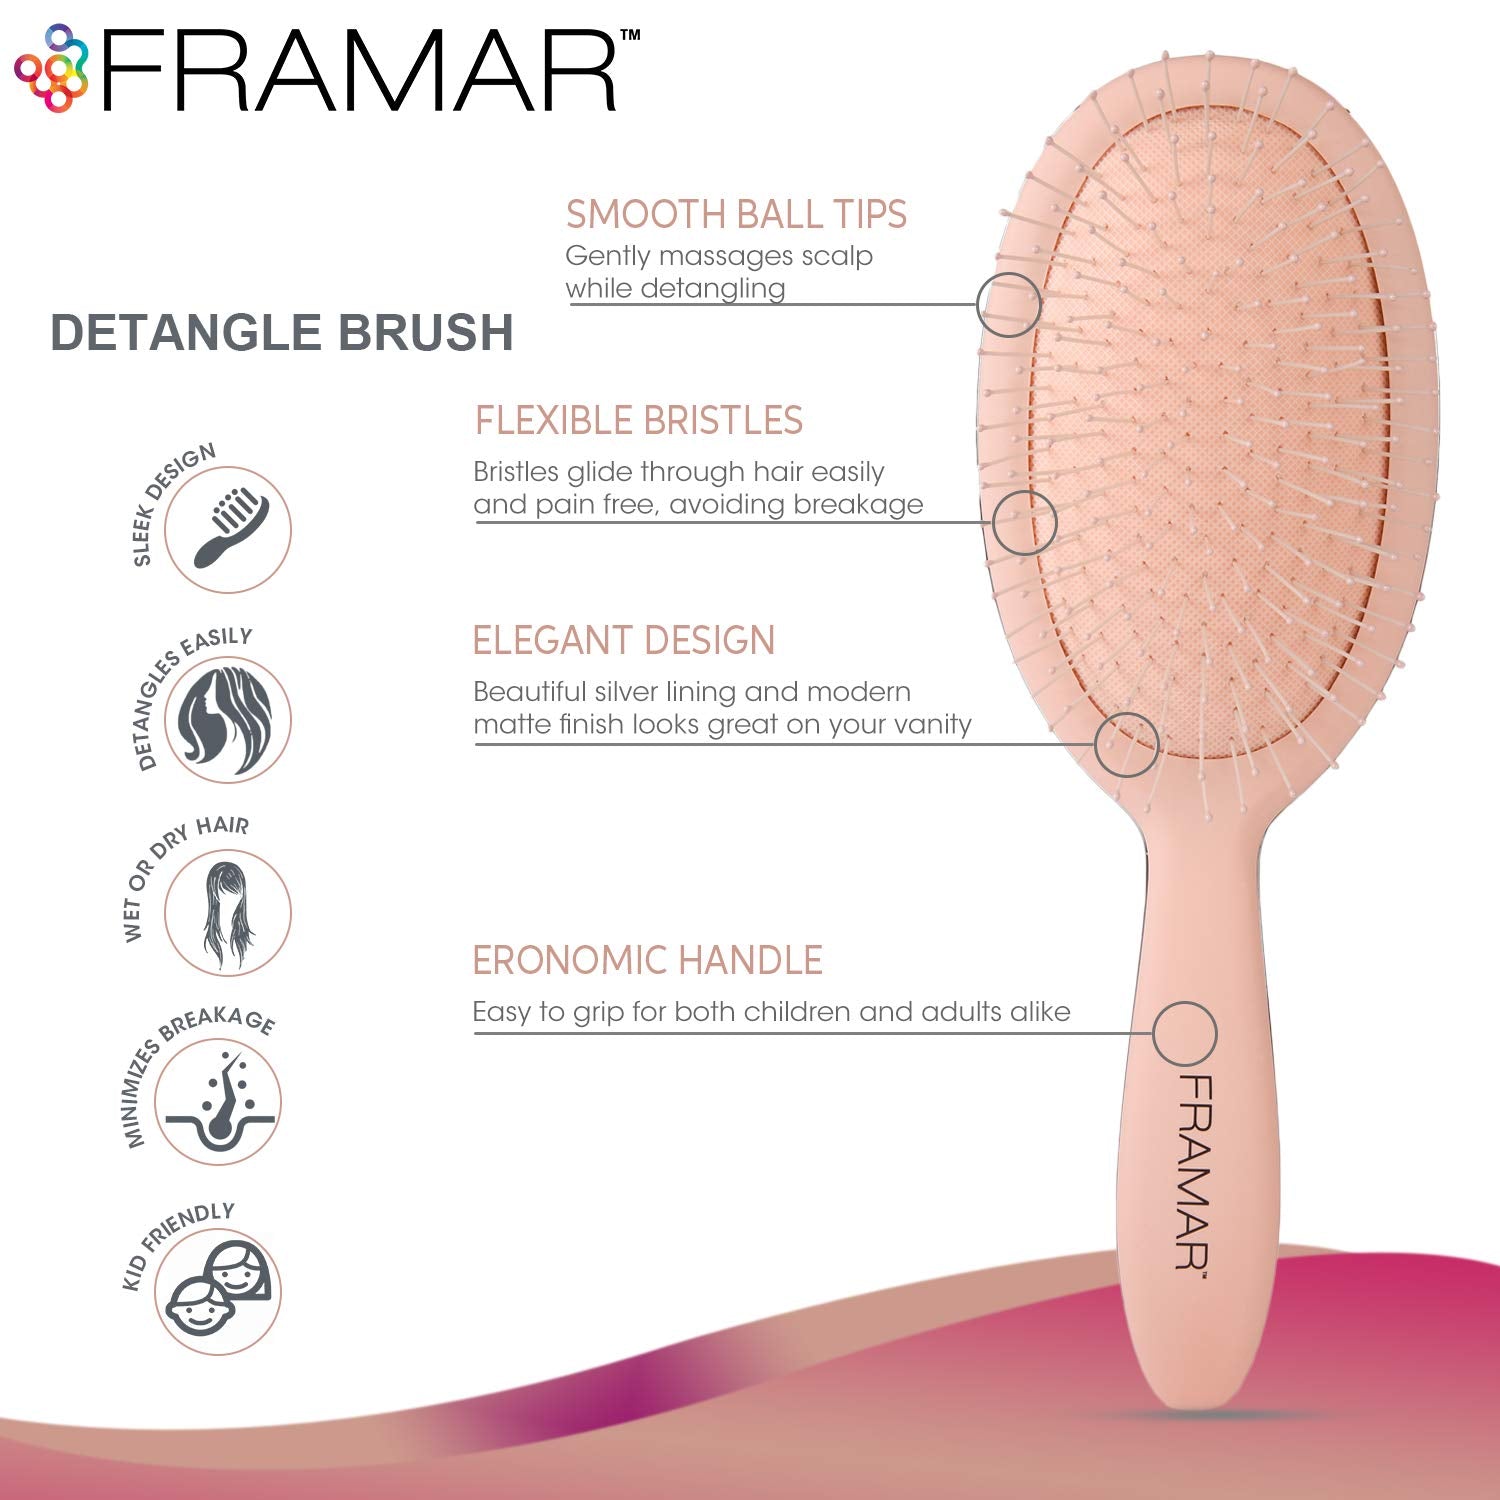 Framar - Champagne Mami - Detangle Brush